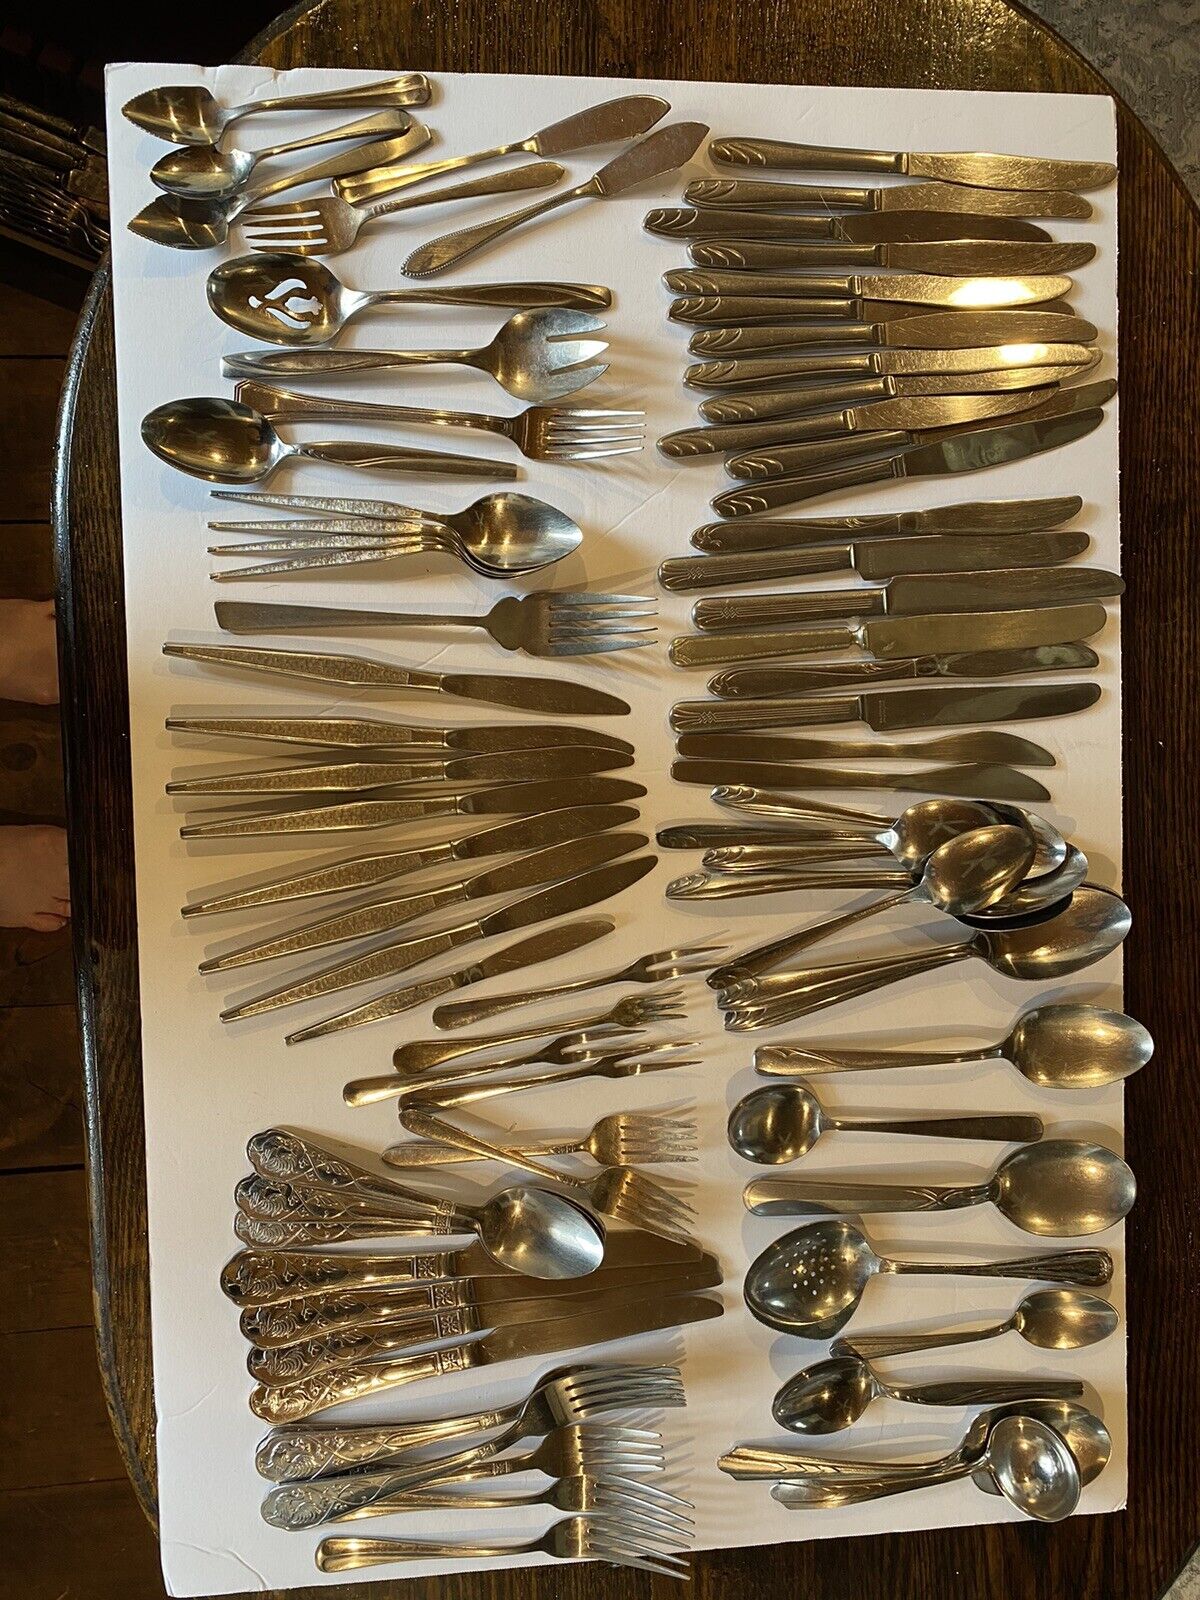 Rogers Oneida Silverware Stainless Steel Flatware Serving Cutlery 81 Pieces